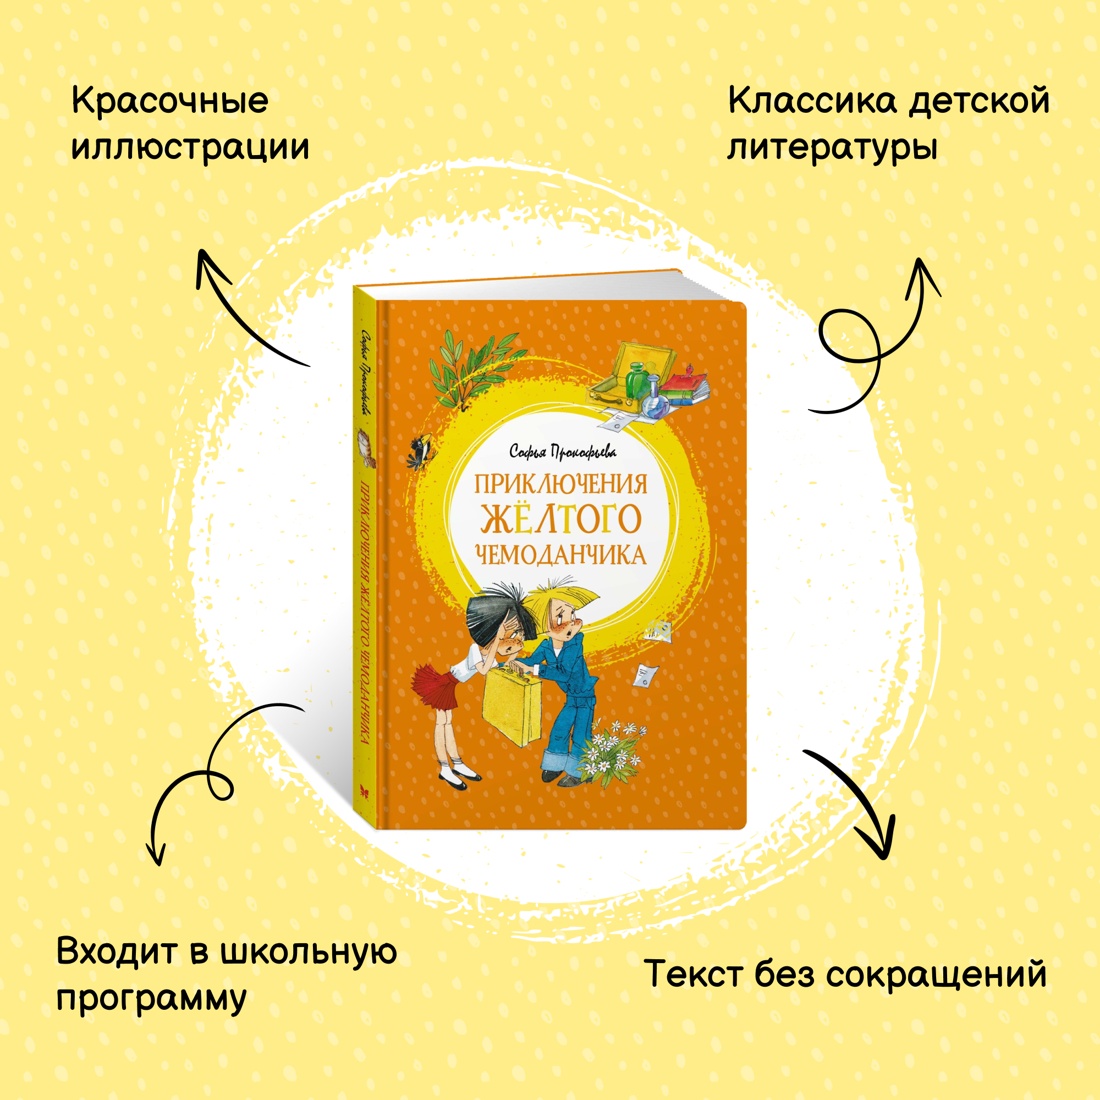 Промо материал к книге "Приключения жёлтого чемоданчика" №0